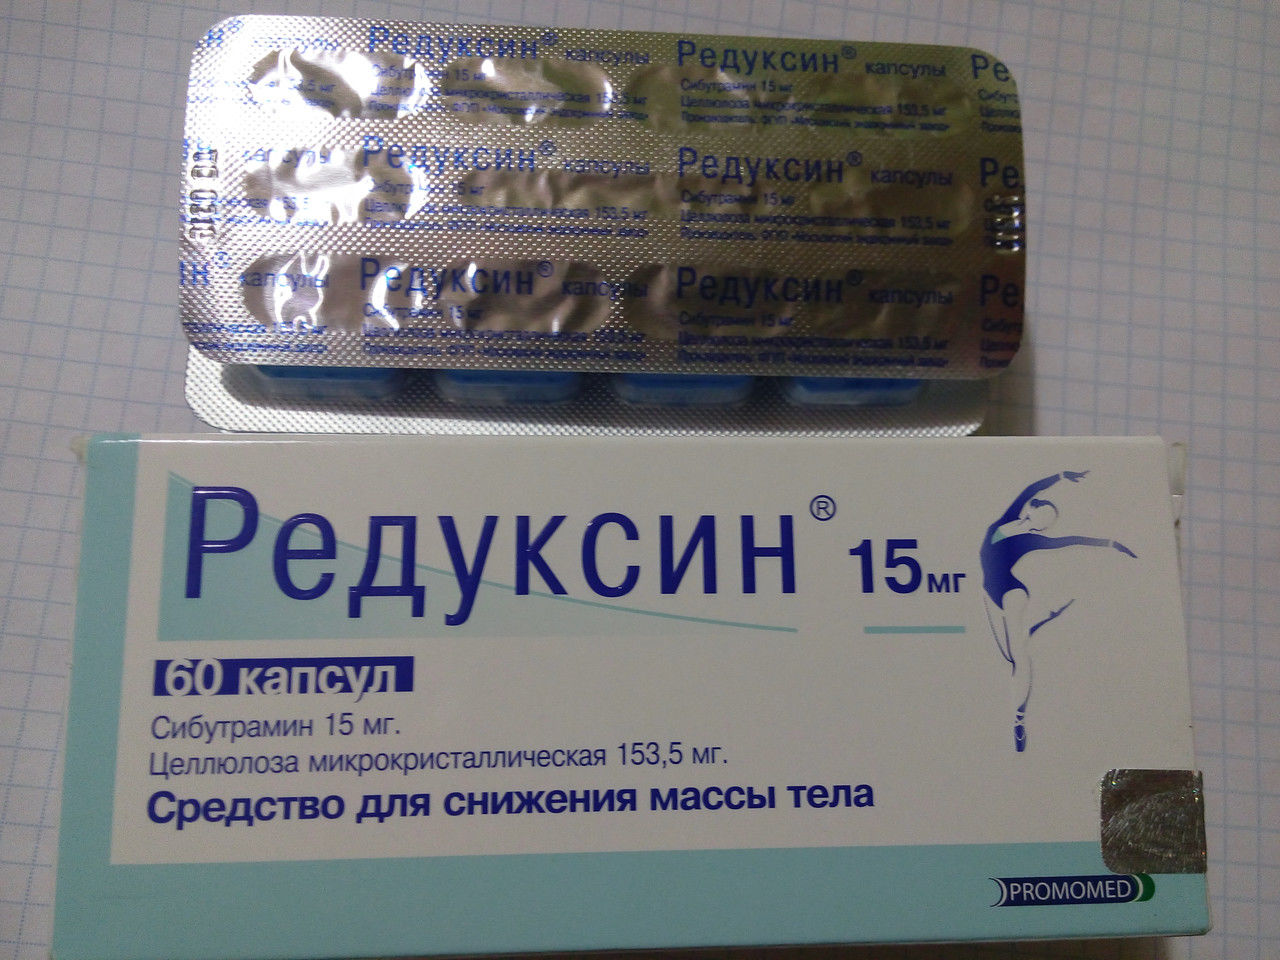 Купить Таблетки Редуксин 60 капсул 15 мг дозировка цена